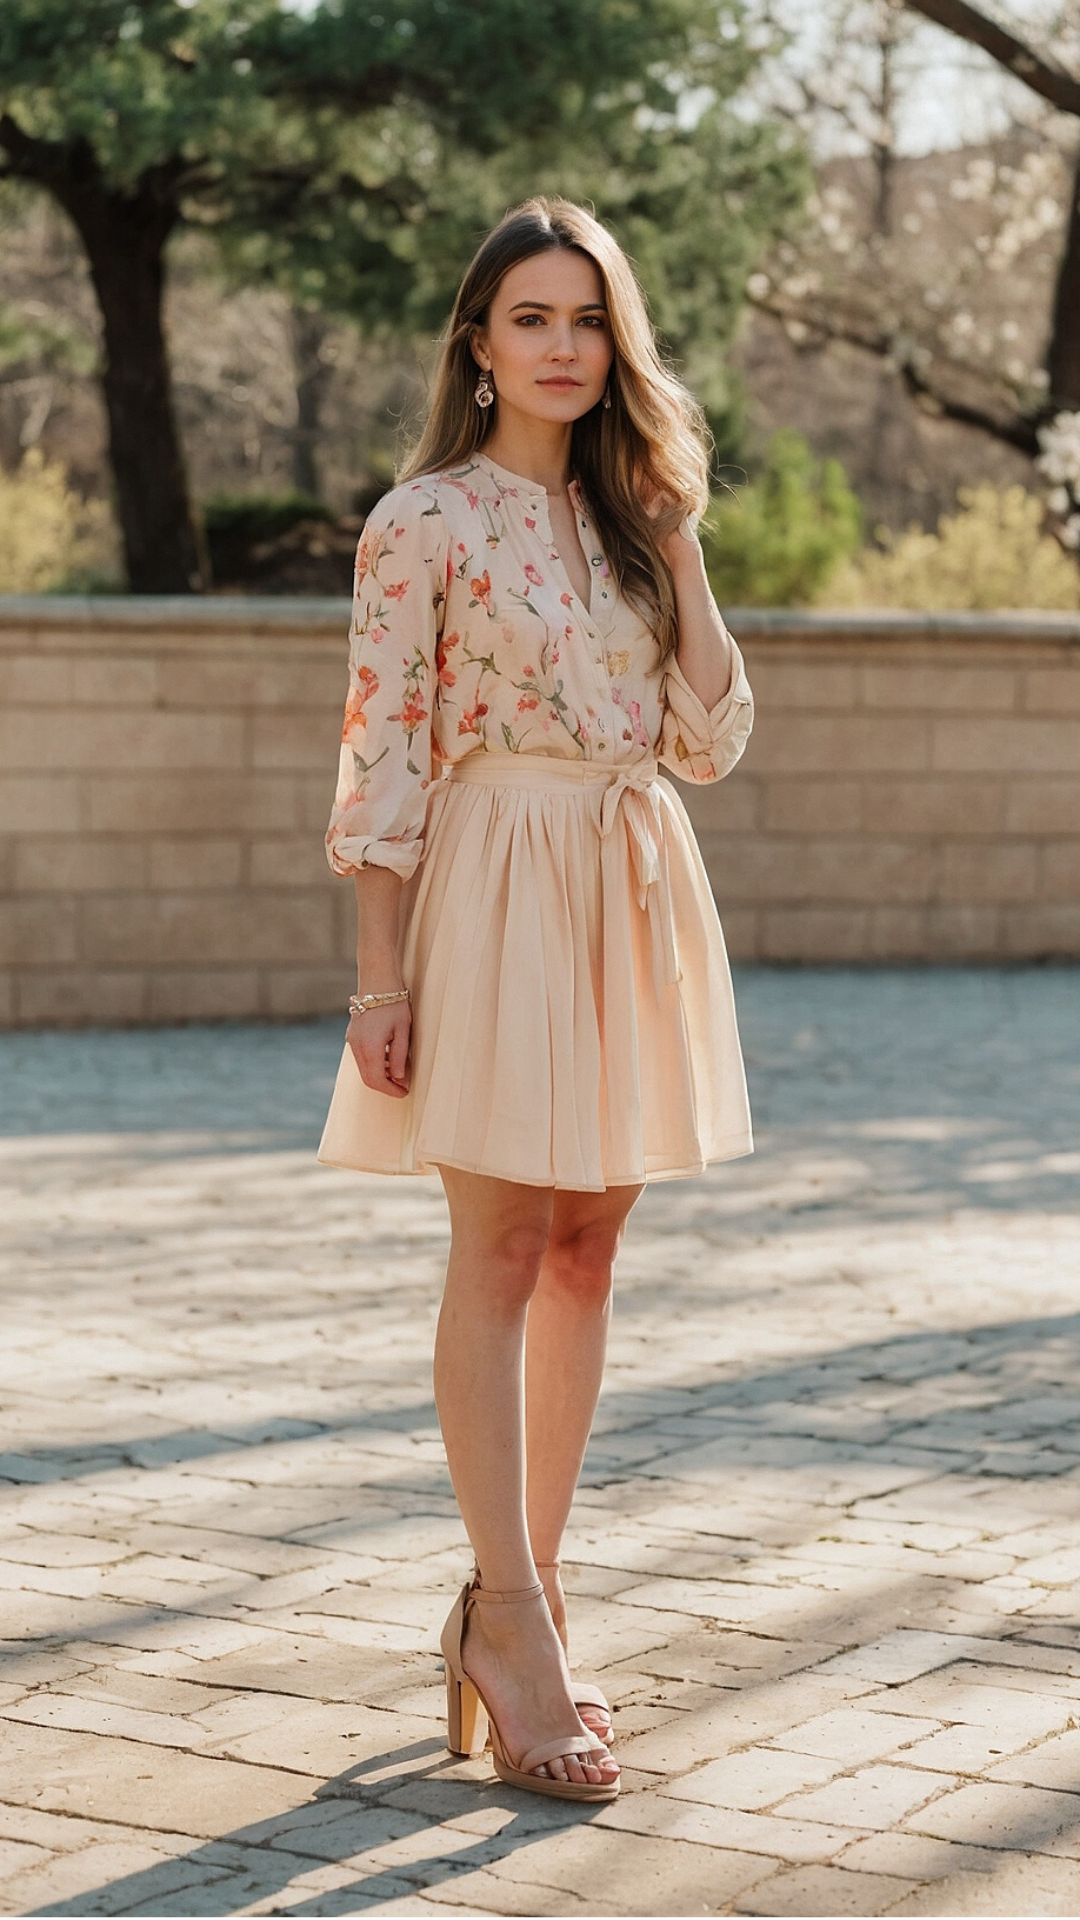 Breezy Blossom Blouse and Skirt